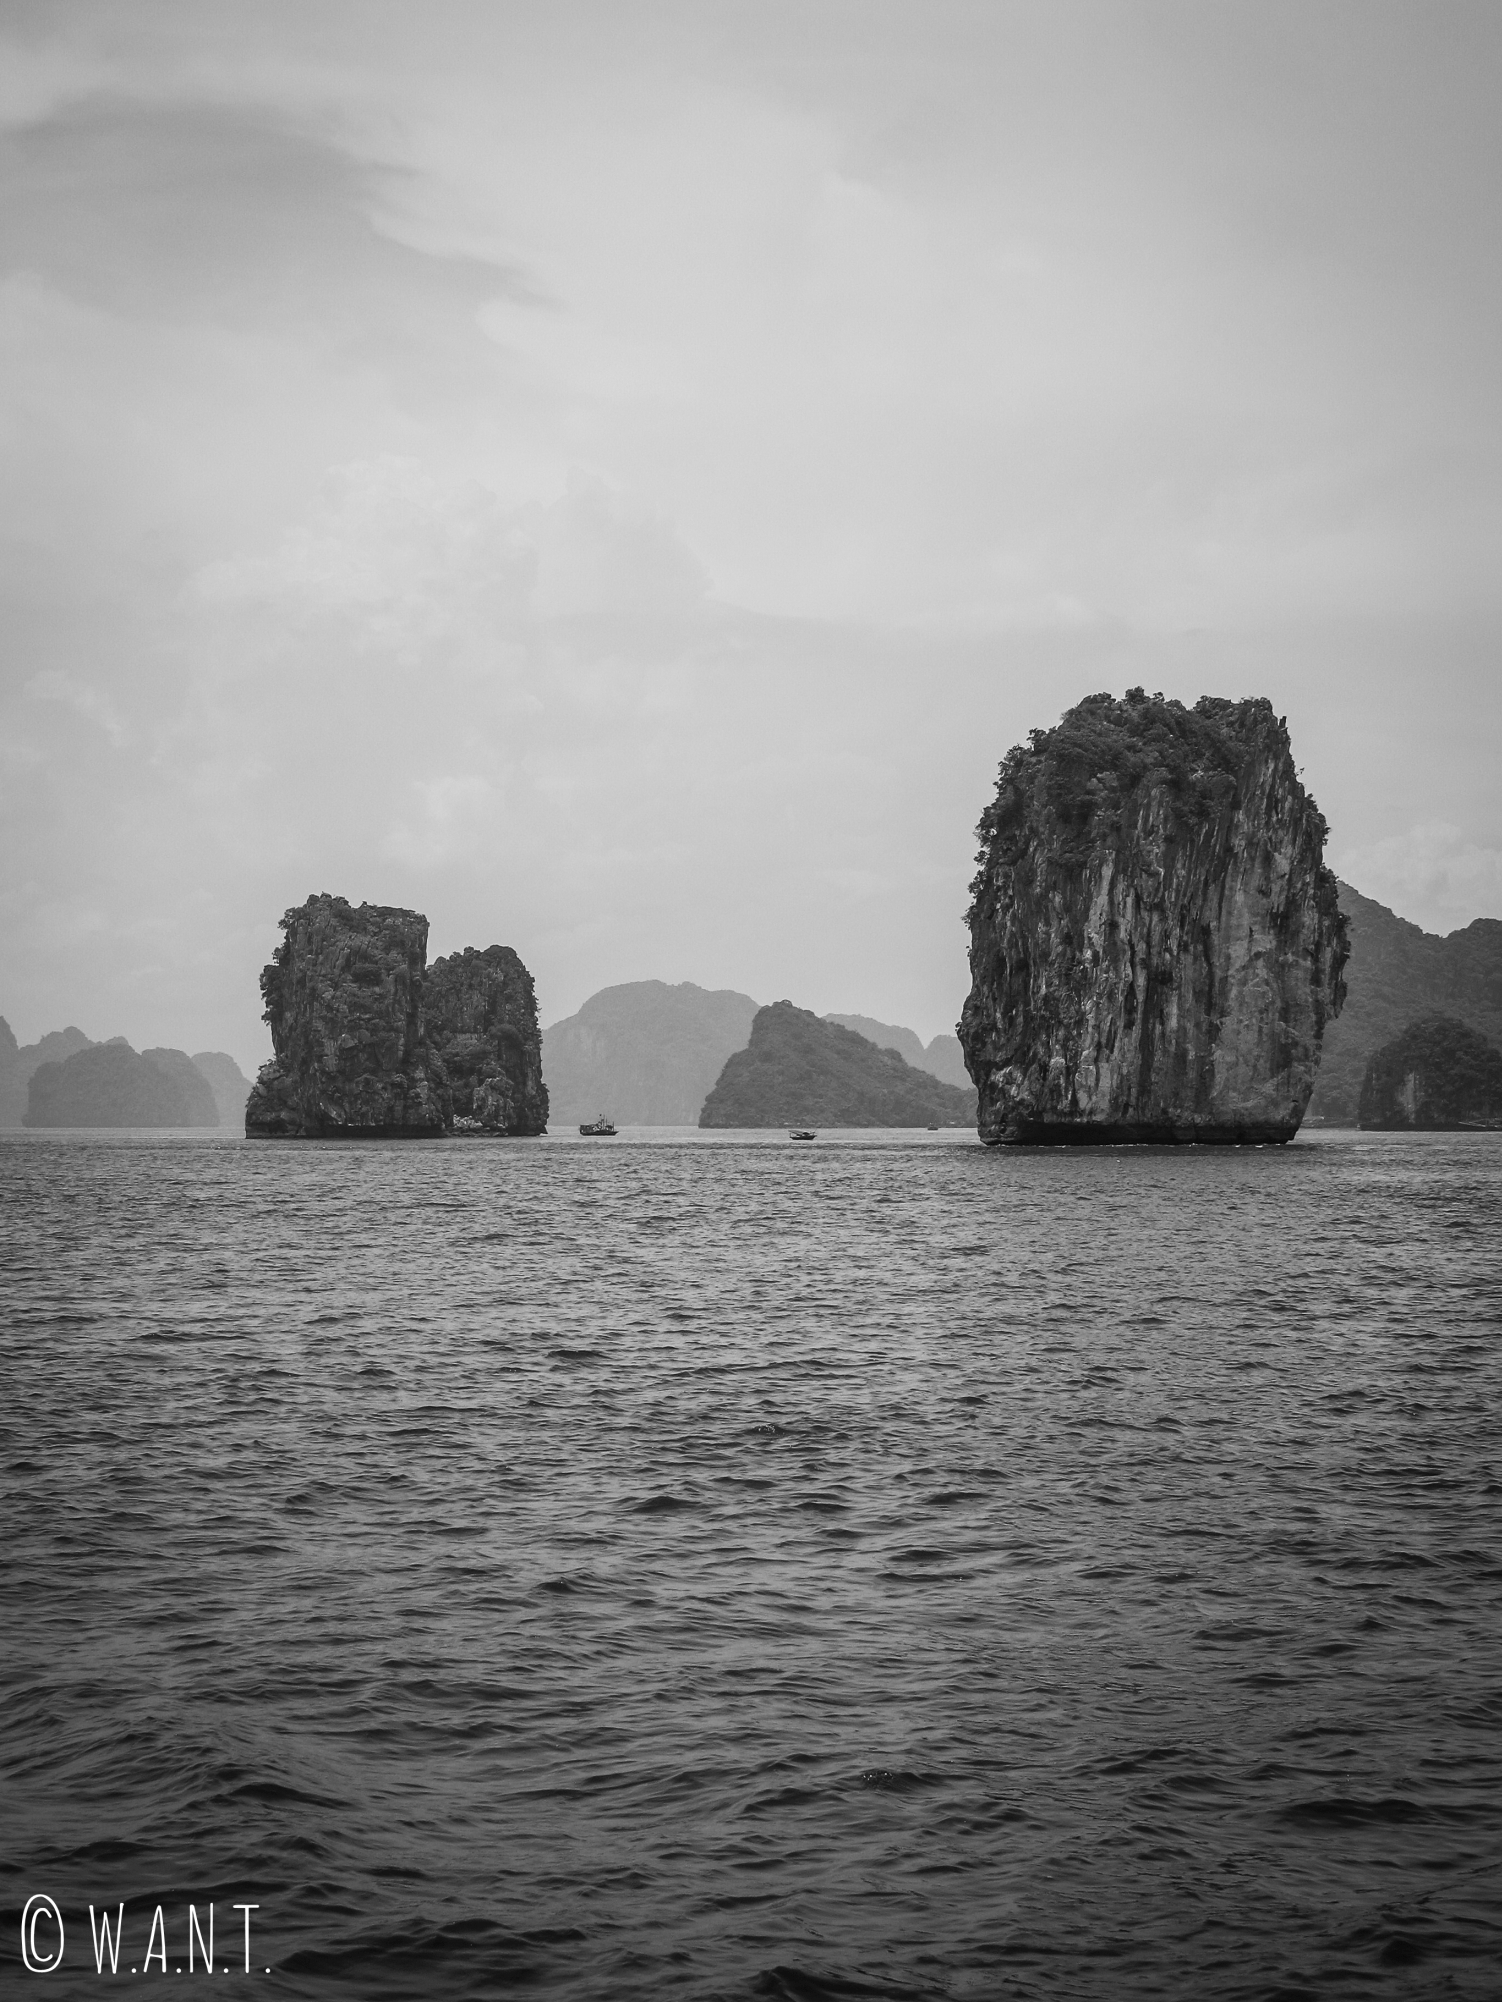 Impressionnants pics karstiques dans la Baie de Lan Ha